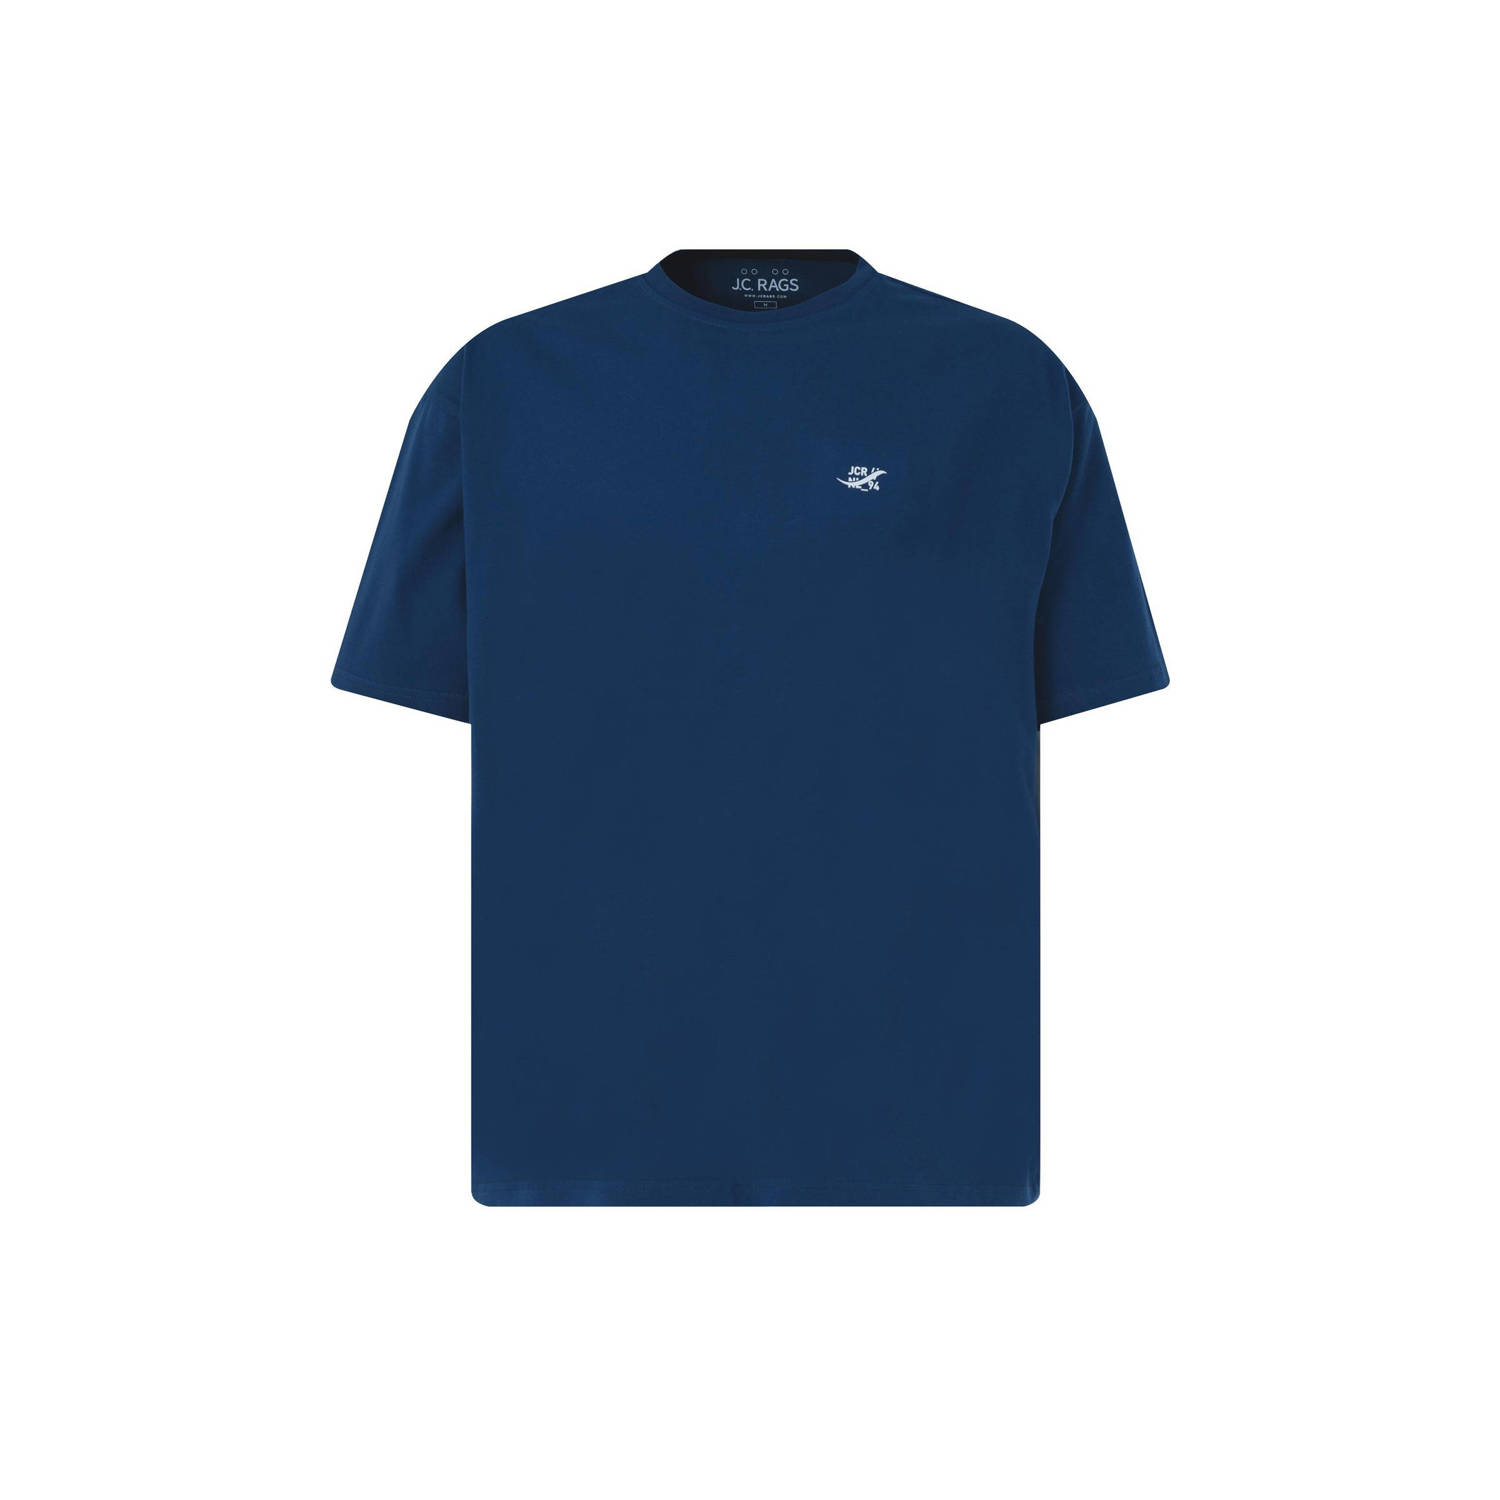 J.C. Rags T-shirt Thomas met backprint blue depths